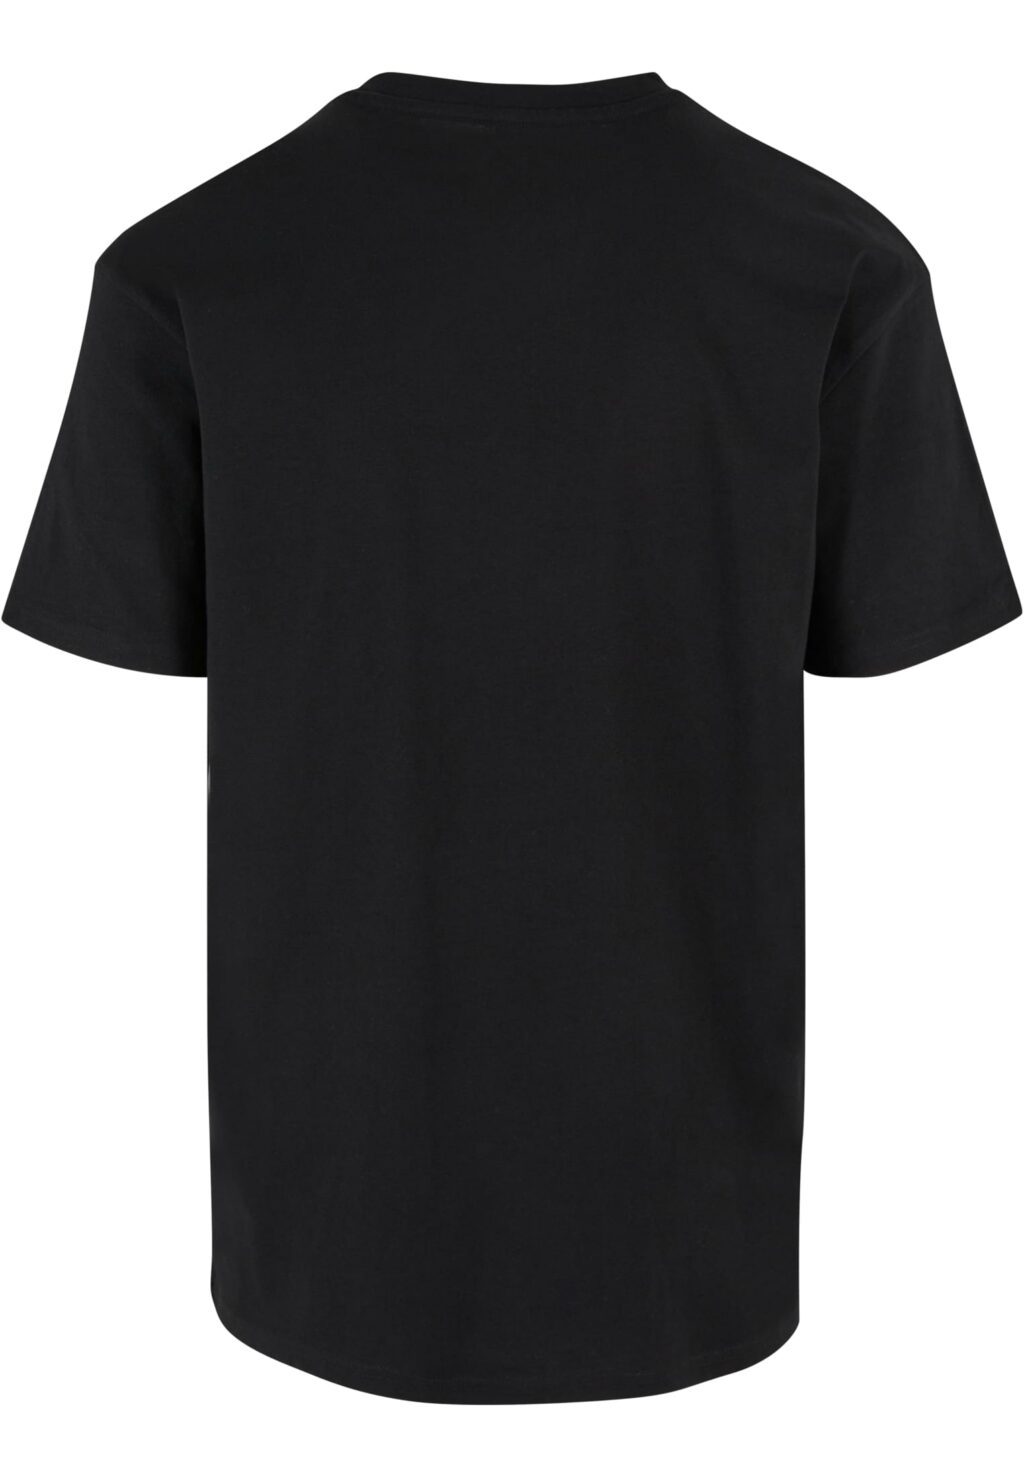 Rocawear Nonchalance T-Shirt black RWTS088T